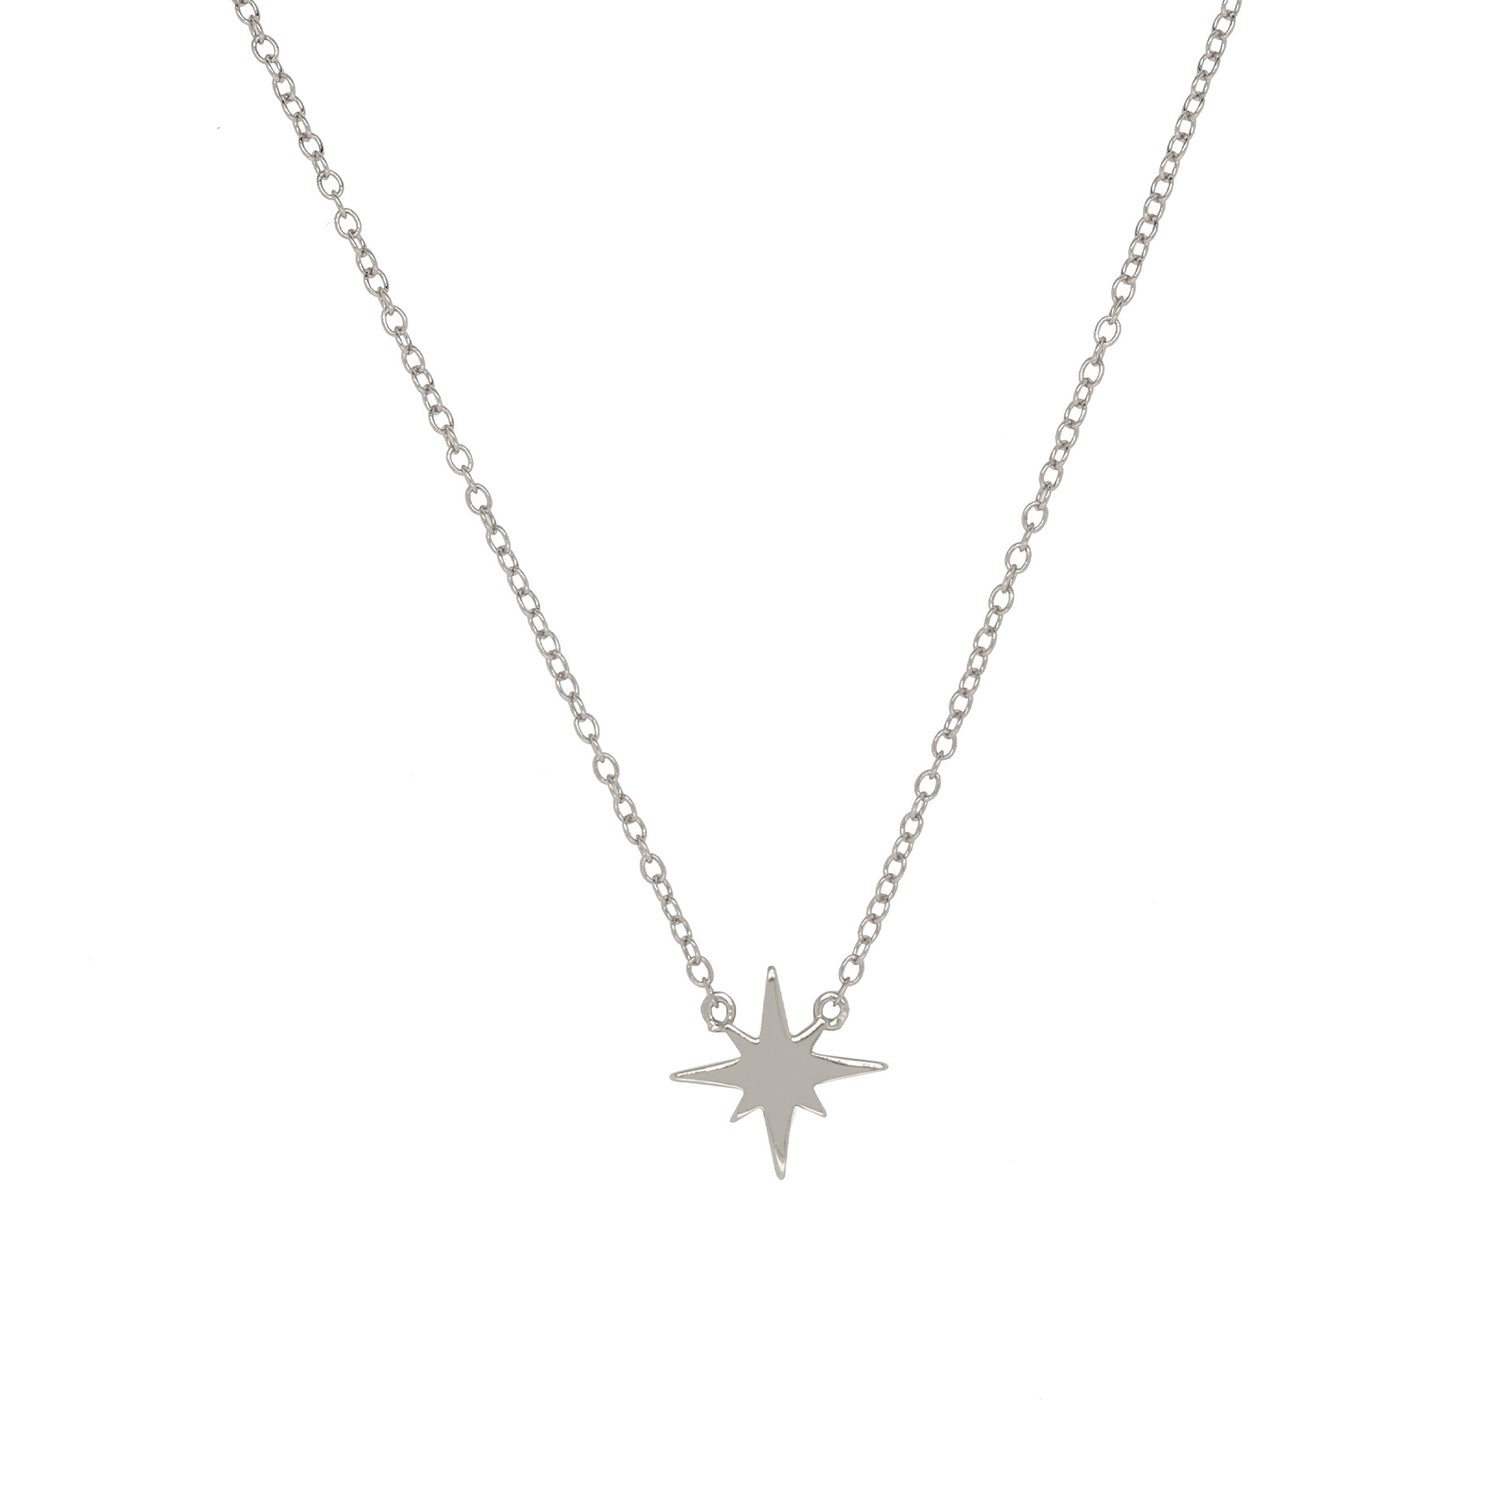 J&CO Jewellery Starburst Locket Necklace Silver